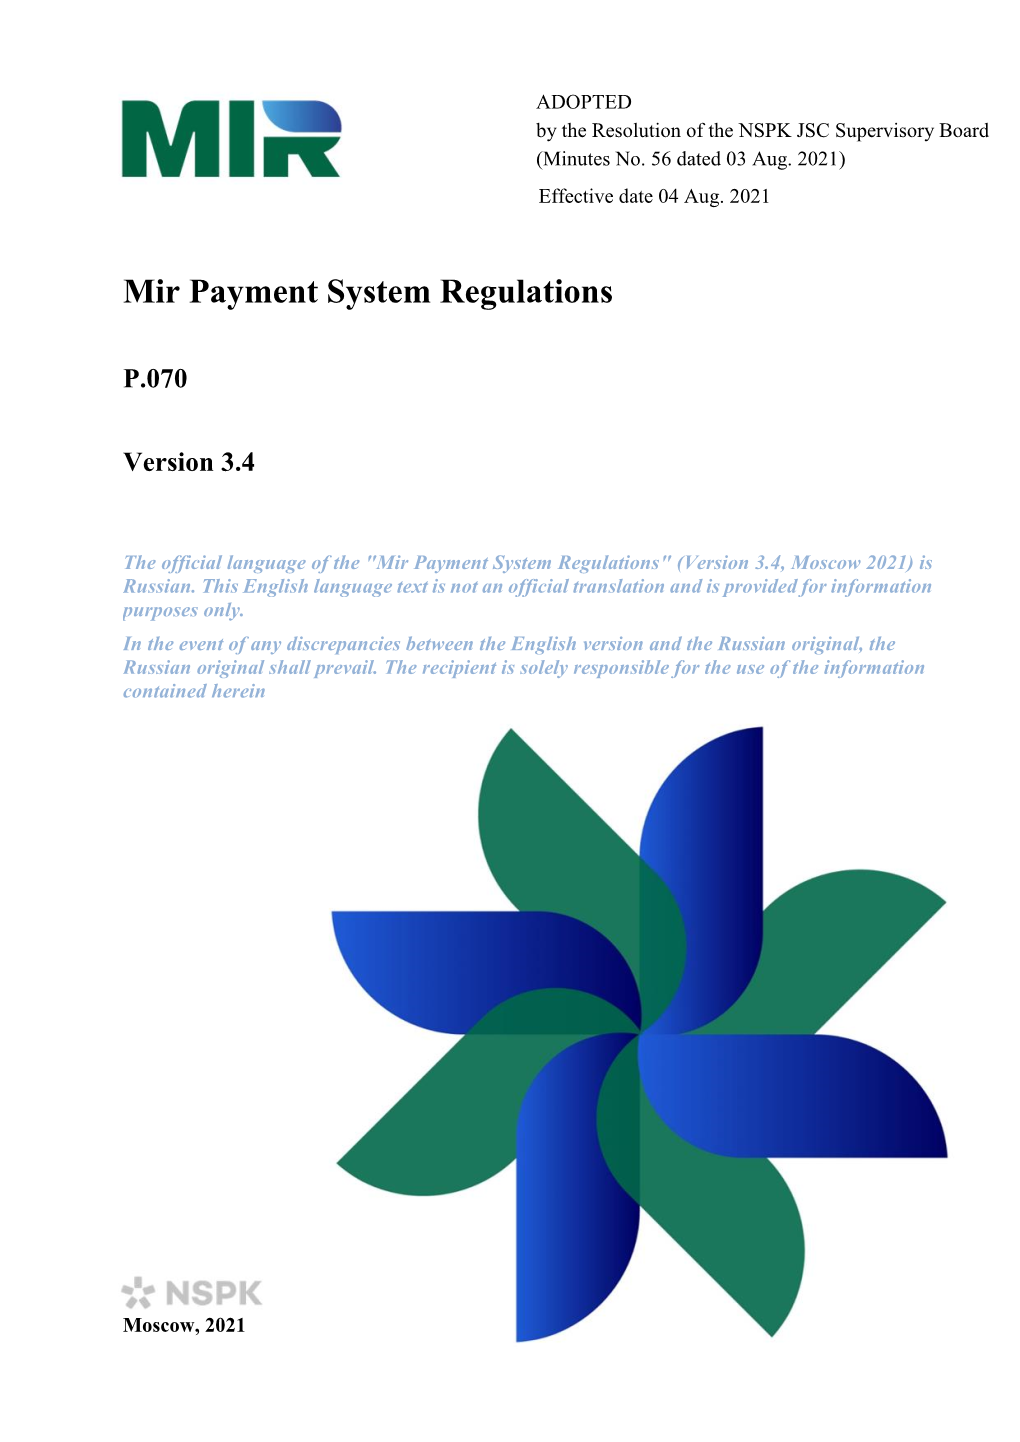 Mir Payment System Regulations V.3.4